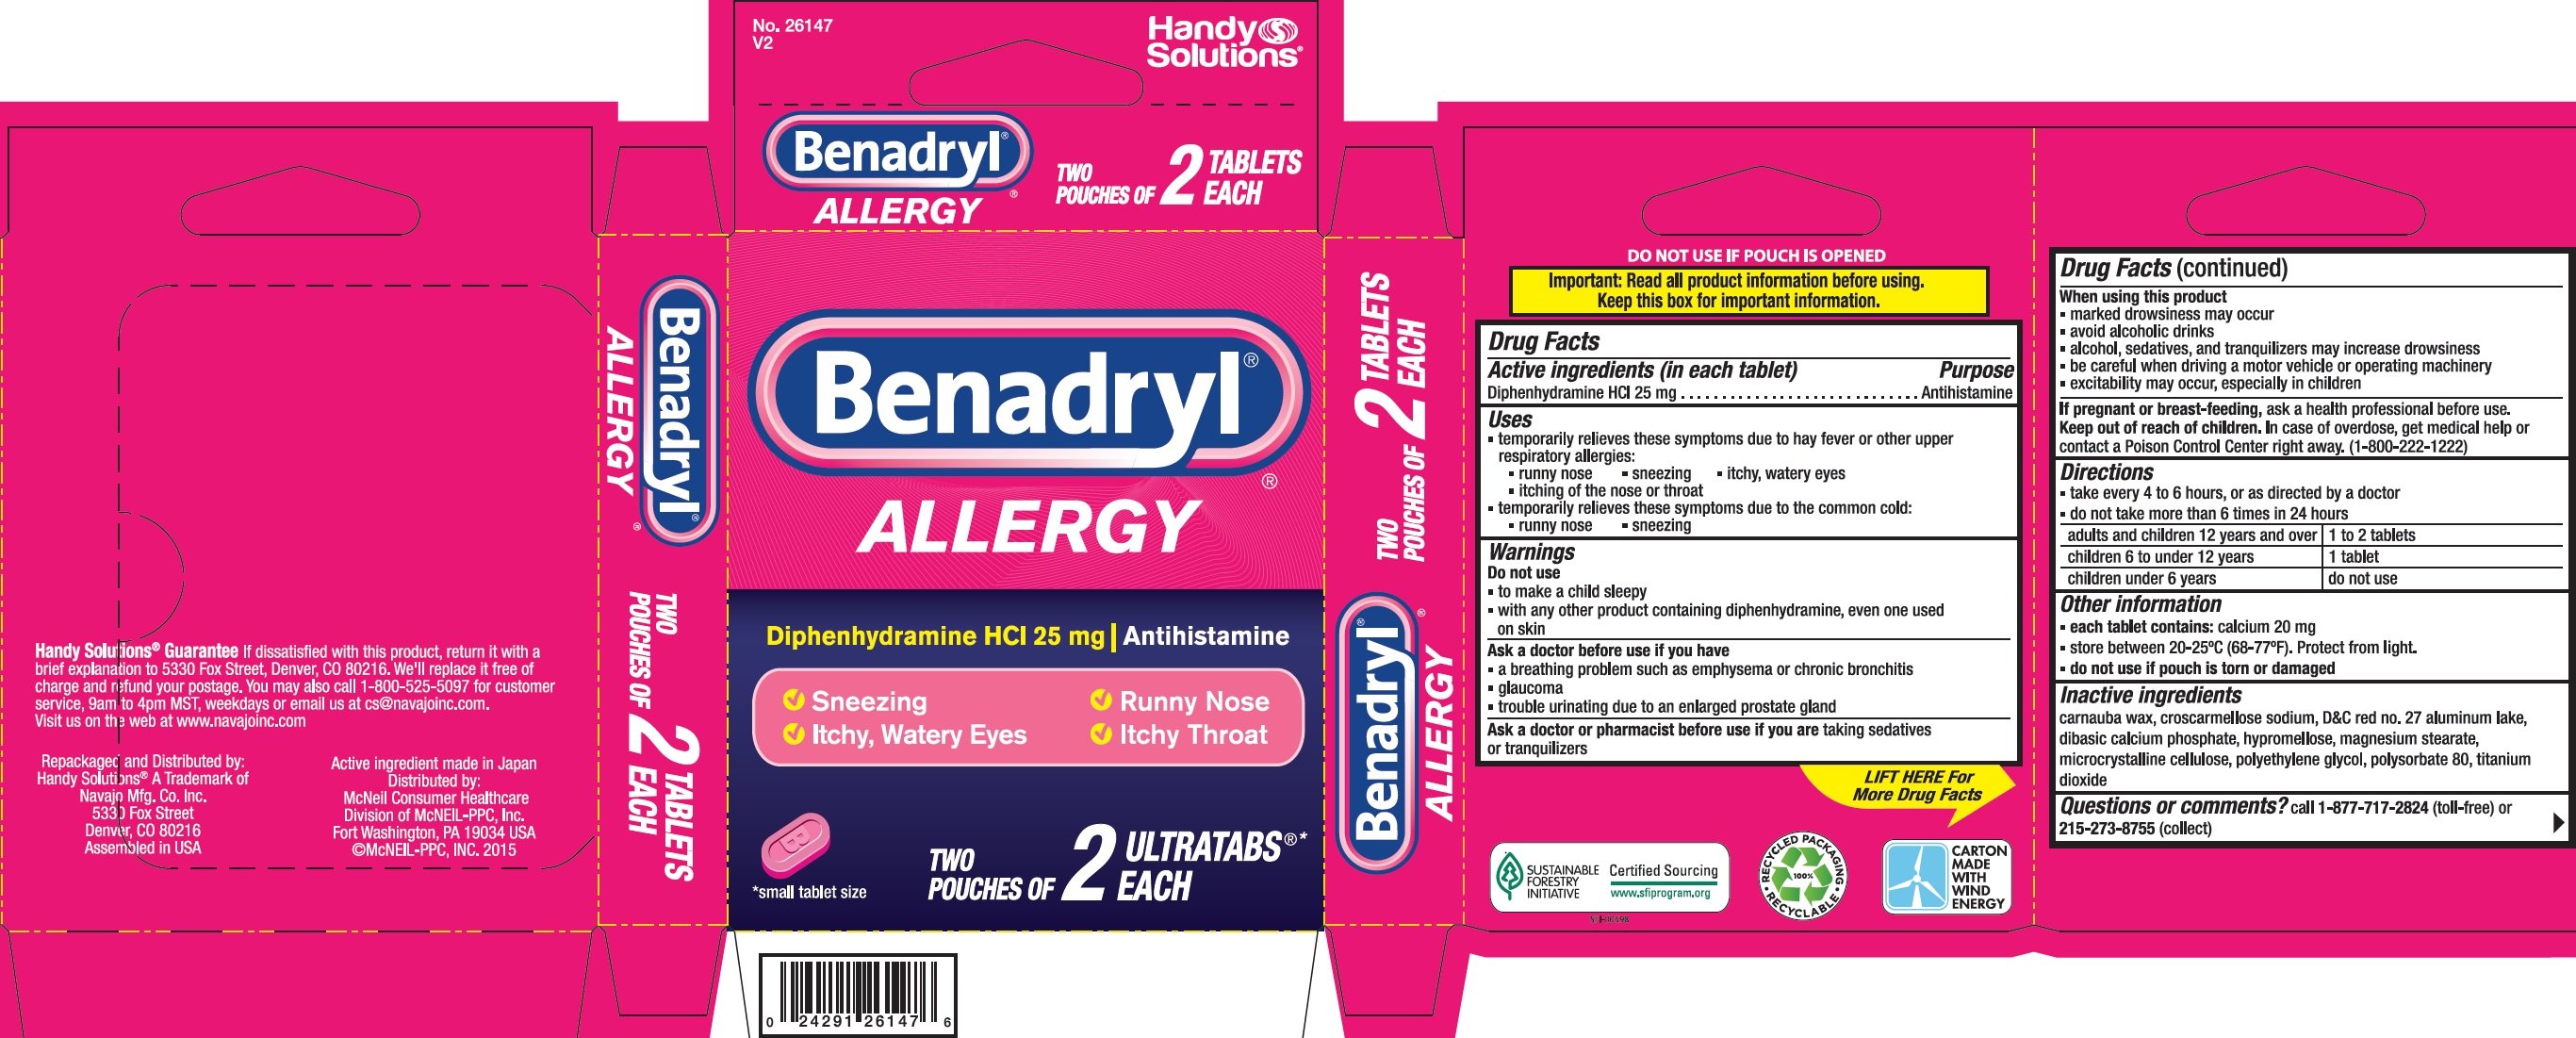 what is the active ingredient in benadryl cream